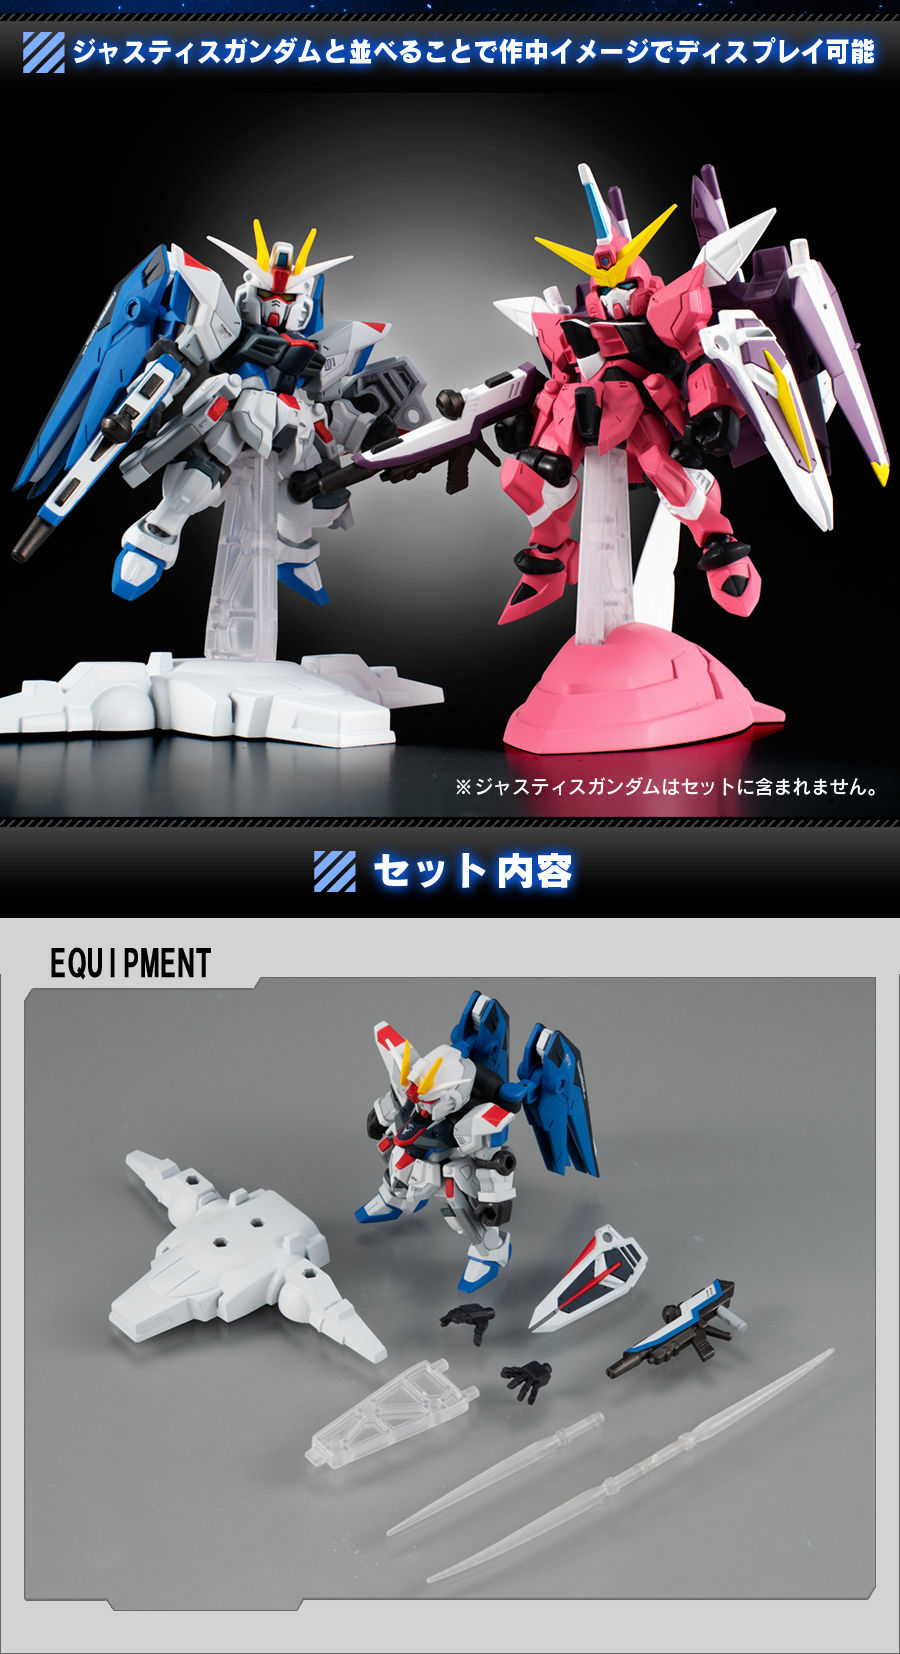 Gashapon Gundam Series: Gundam Mobile Suit Ensemble EX ZGMF-X10A Freedom Gundam(Gundam China Project)